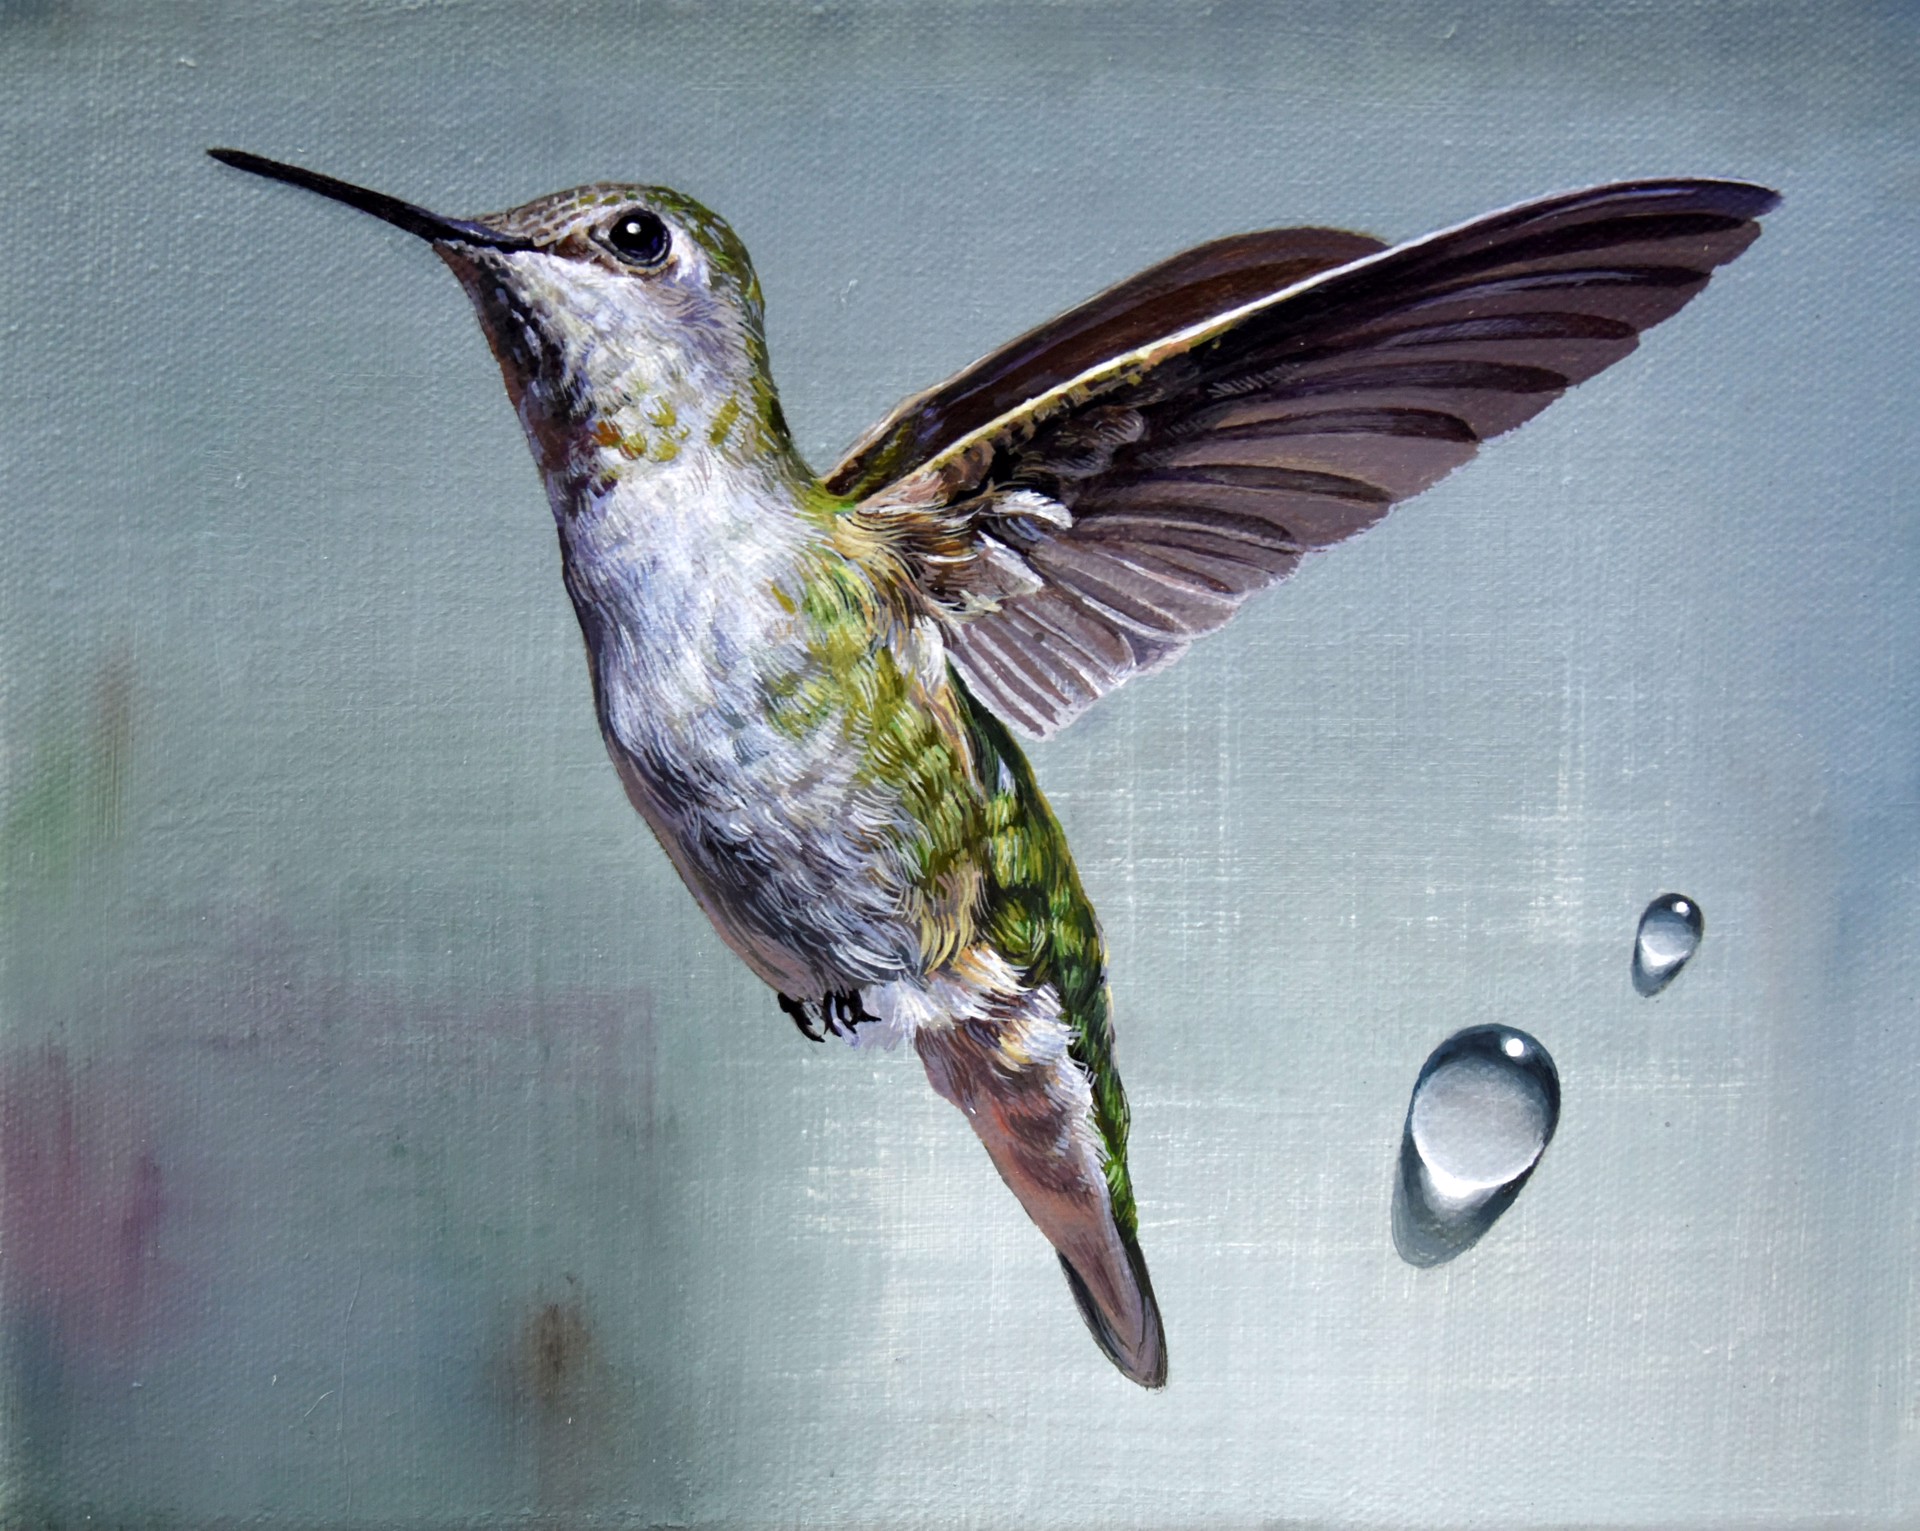 Hummingbird and Water Drops by Paul Art Lee